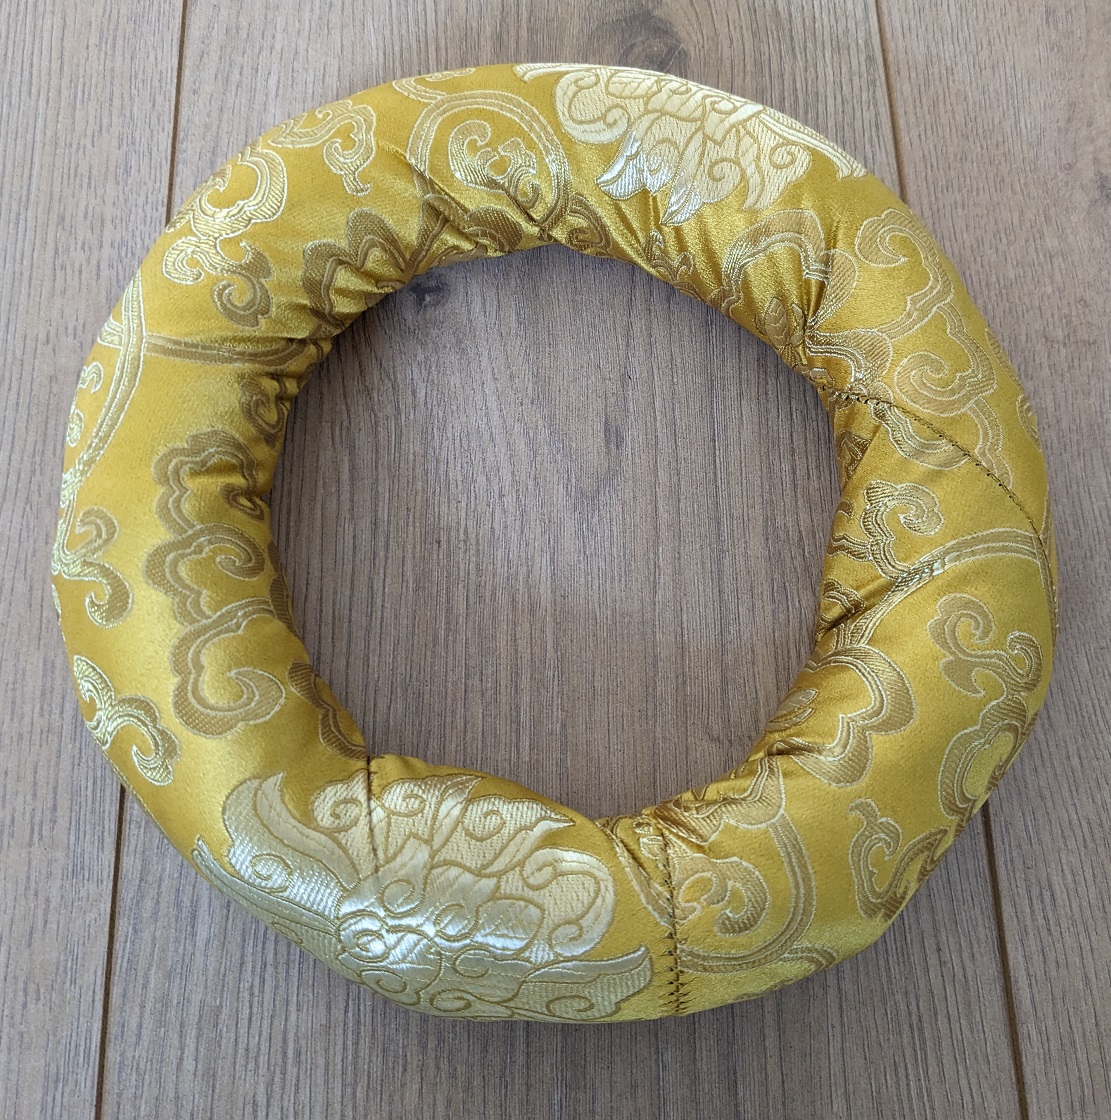 Tibetan Bowl Ring Cushion 20 cm Diameter Yellow